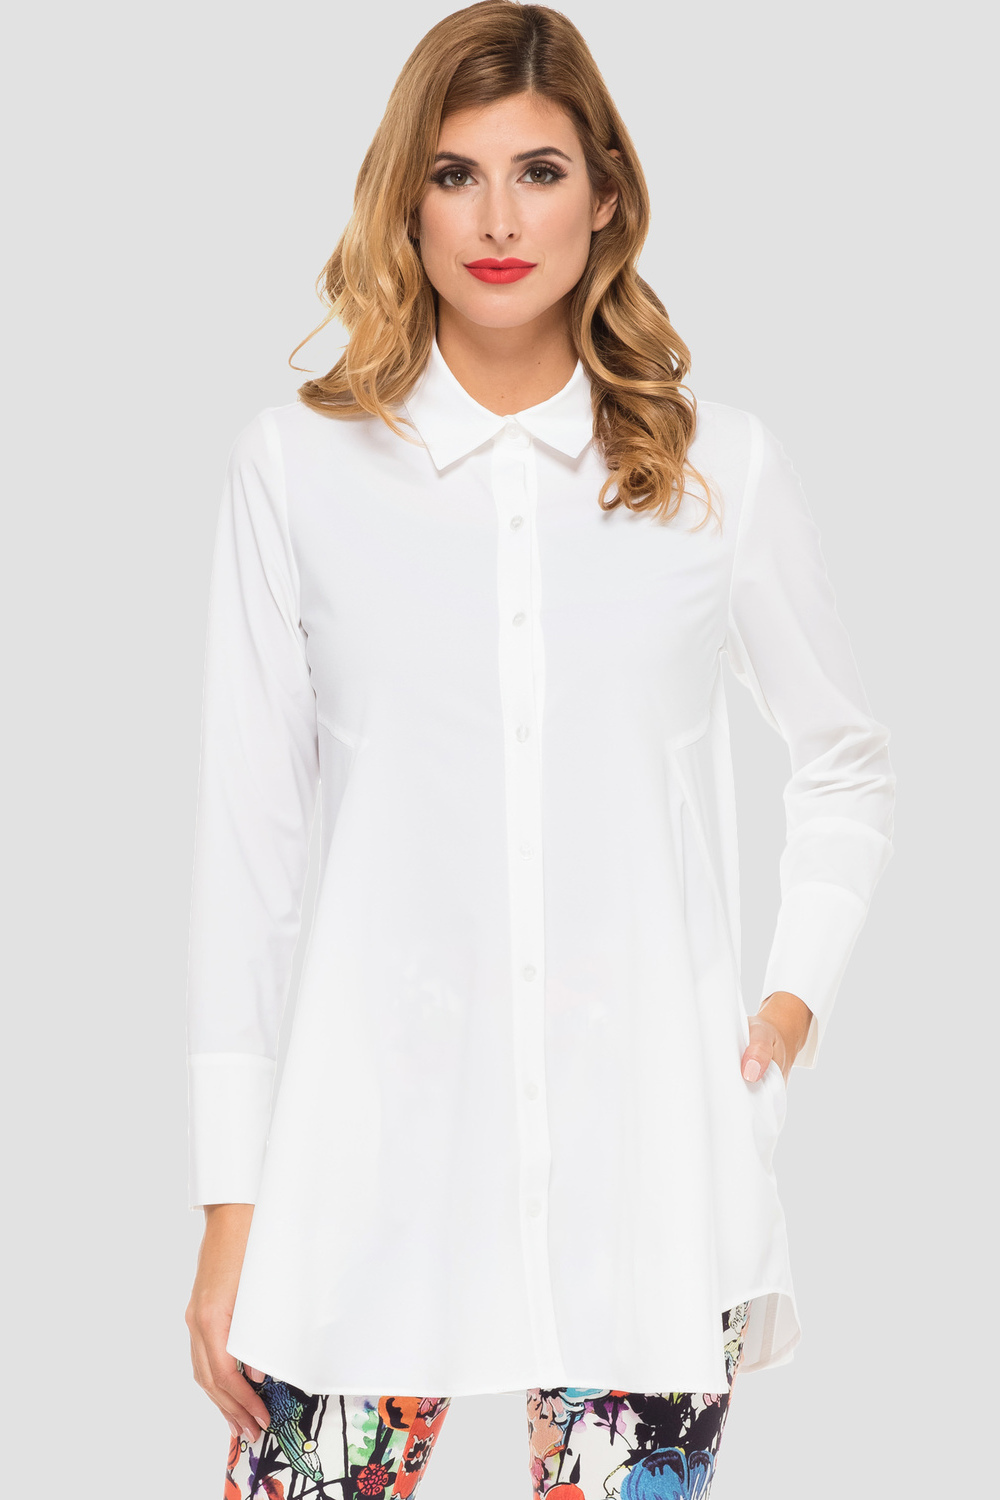 Joseph Ribkoff Shirt Style 191434. White